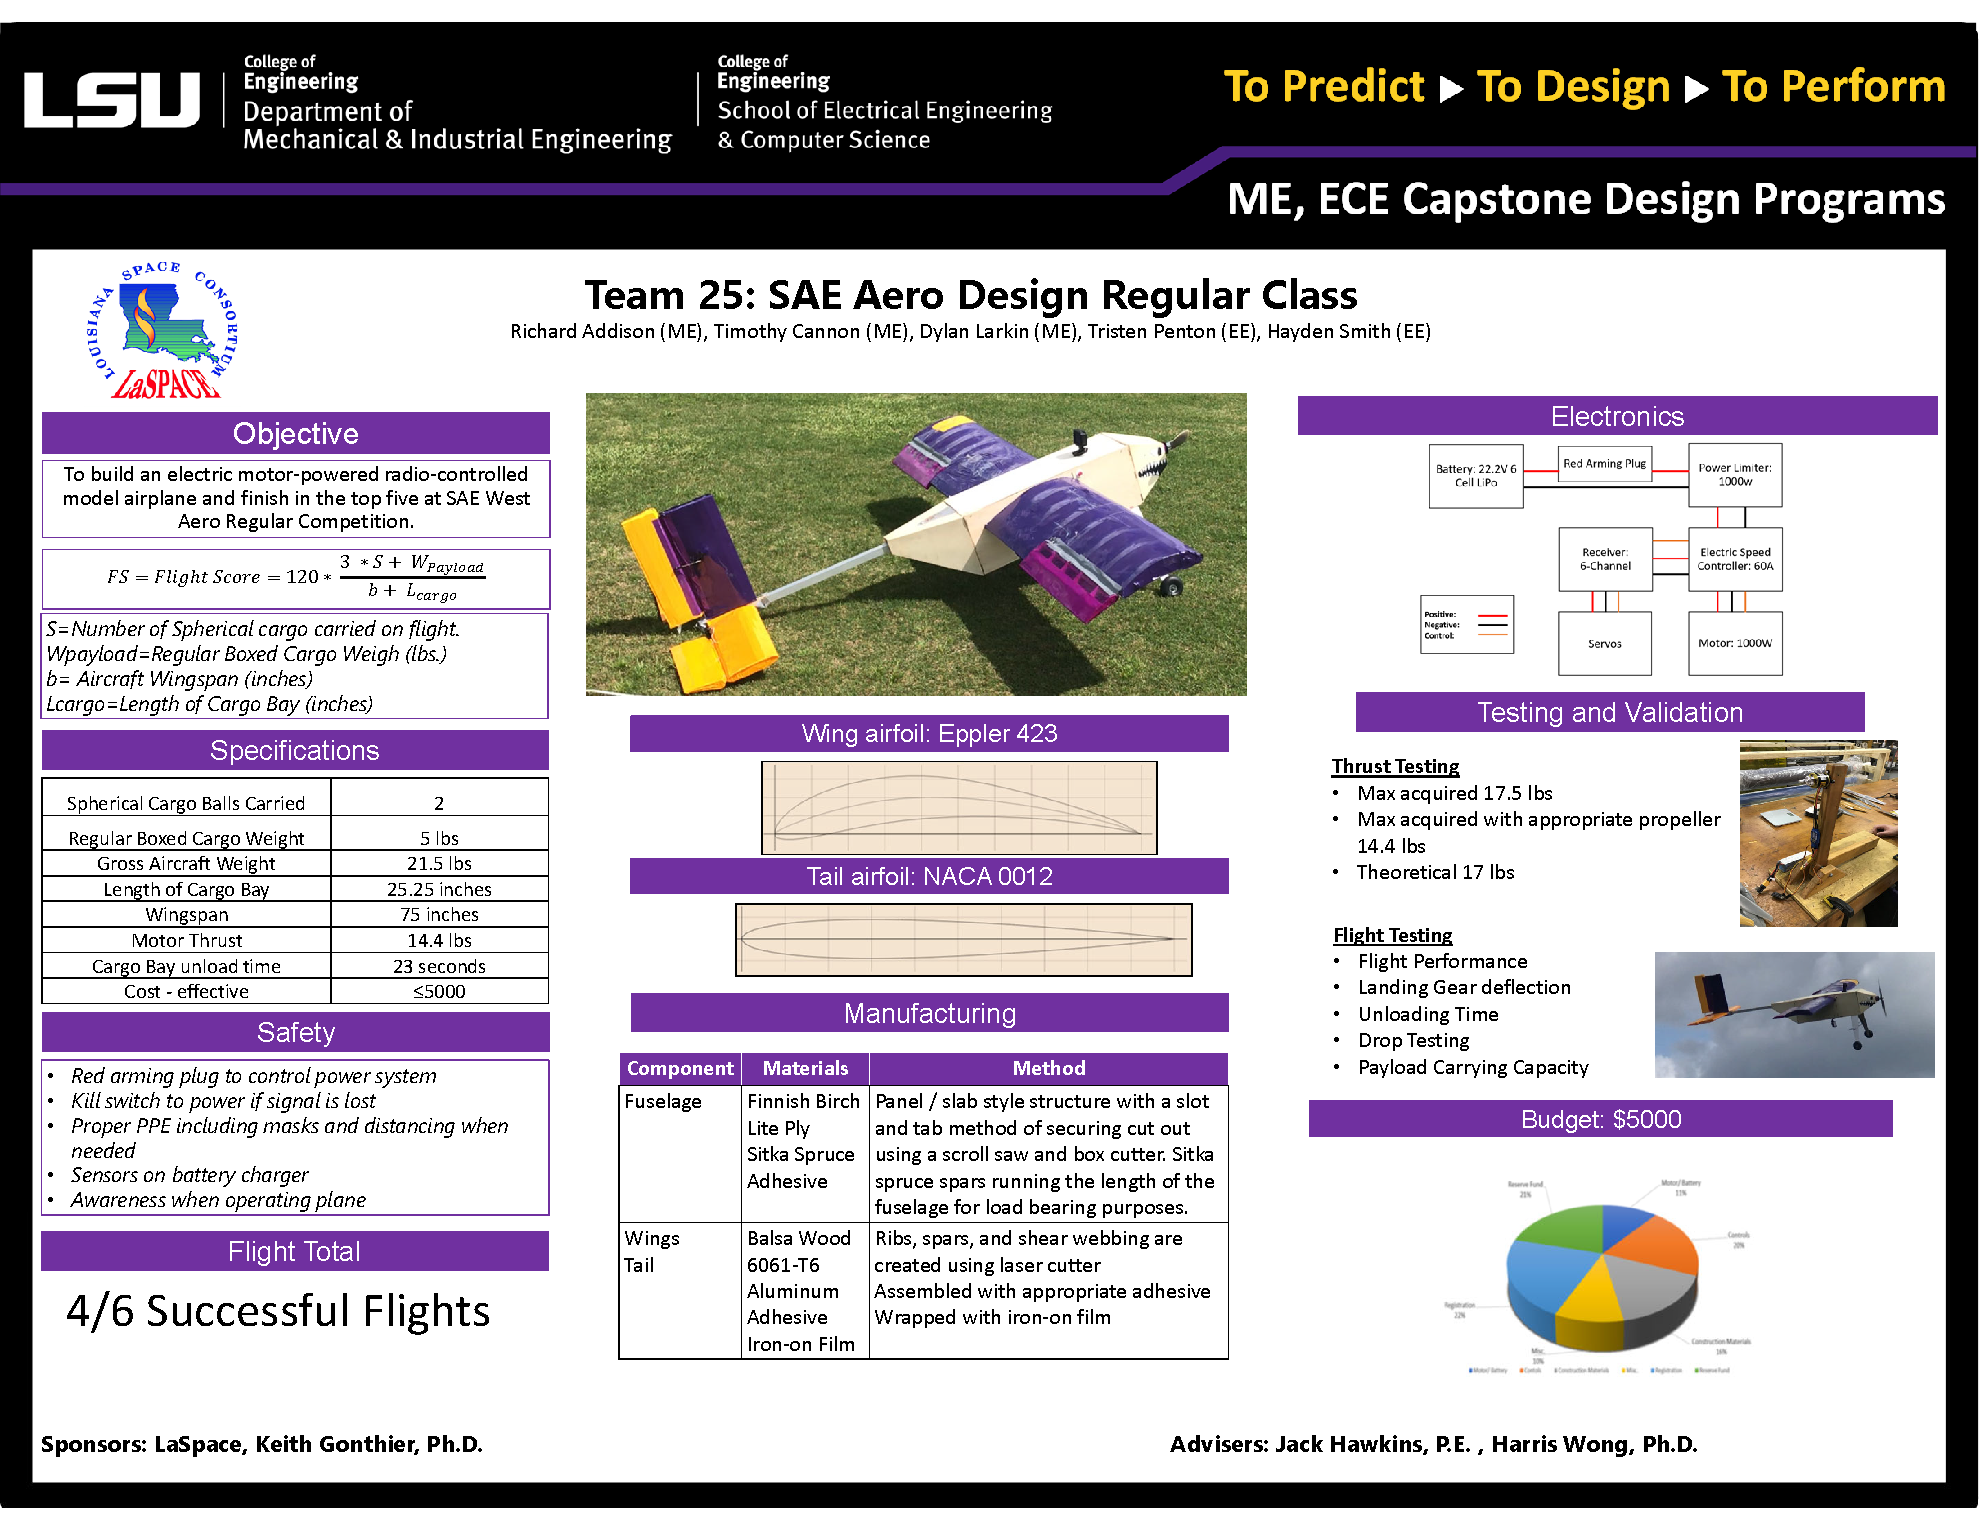 Project 25: SAE Aero Design (Regular Class) (2021)